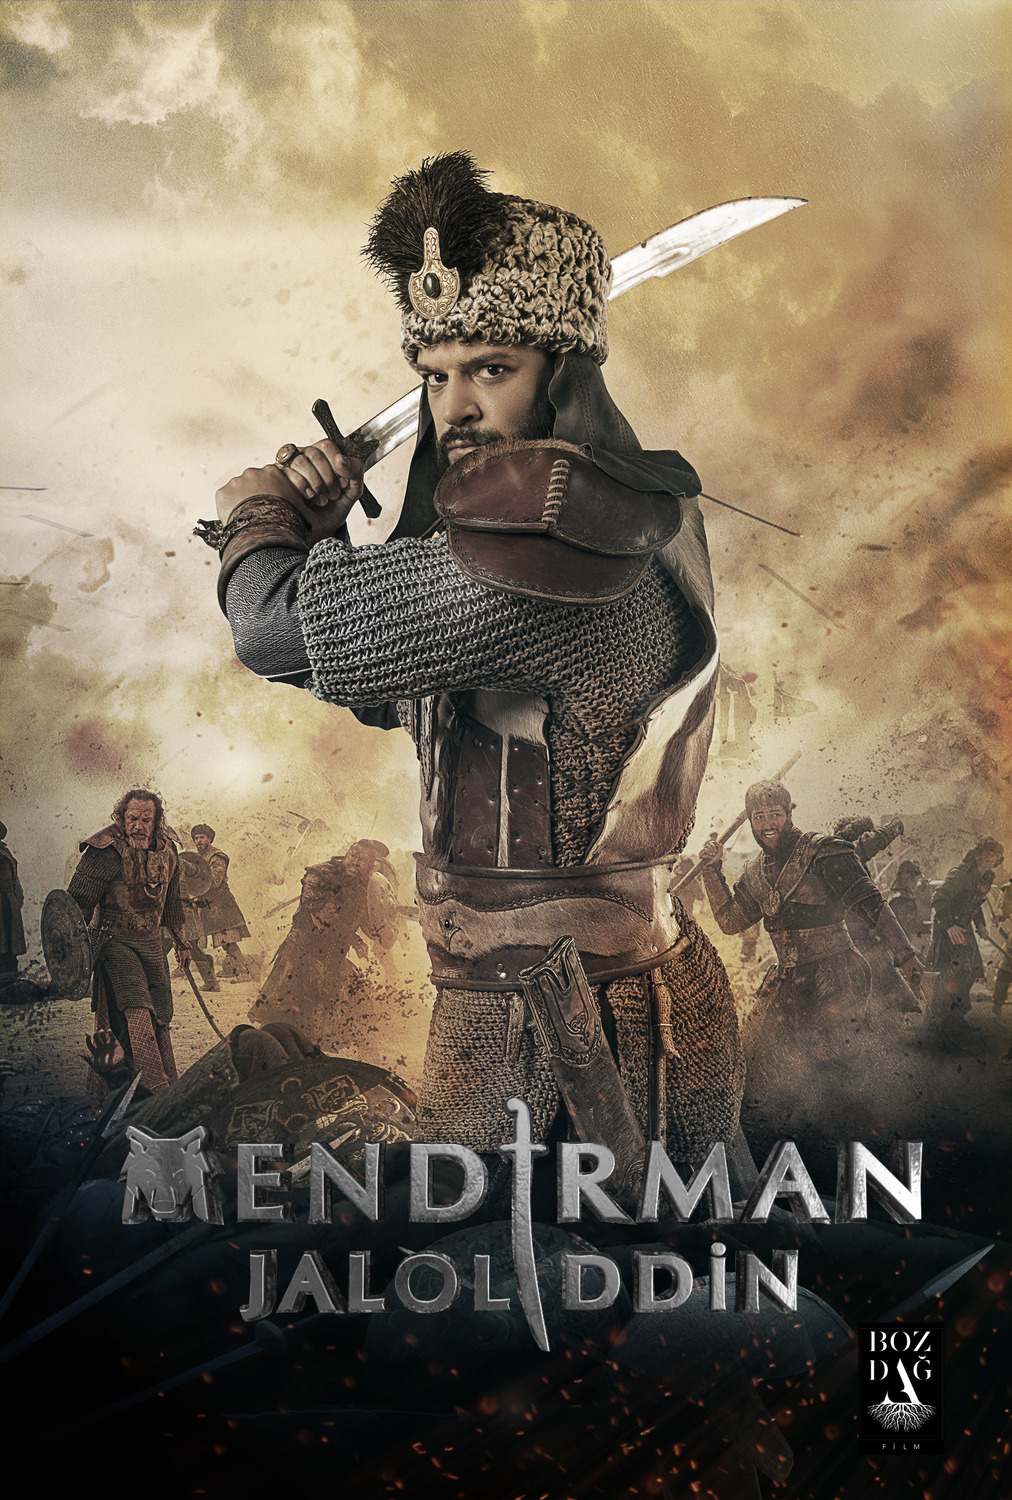 Extra Large TV Poster Image for Mendirman Jaloliddin (#7 of 7)